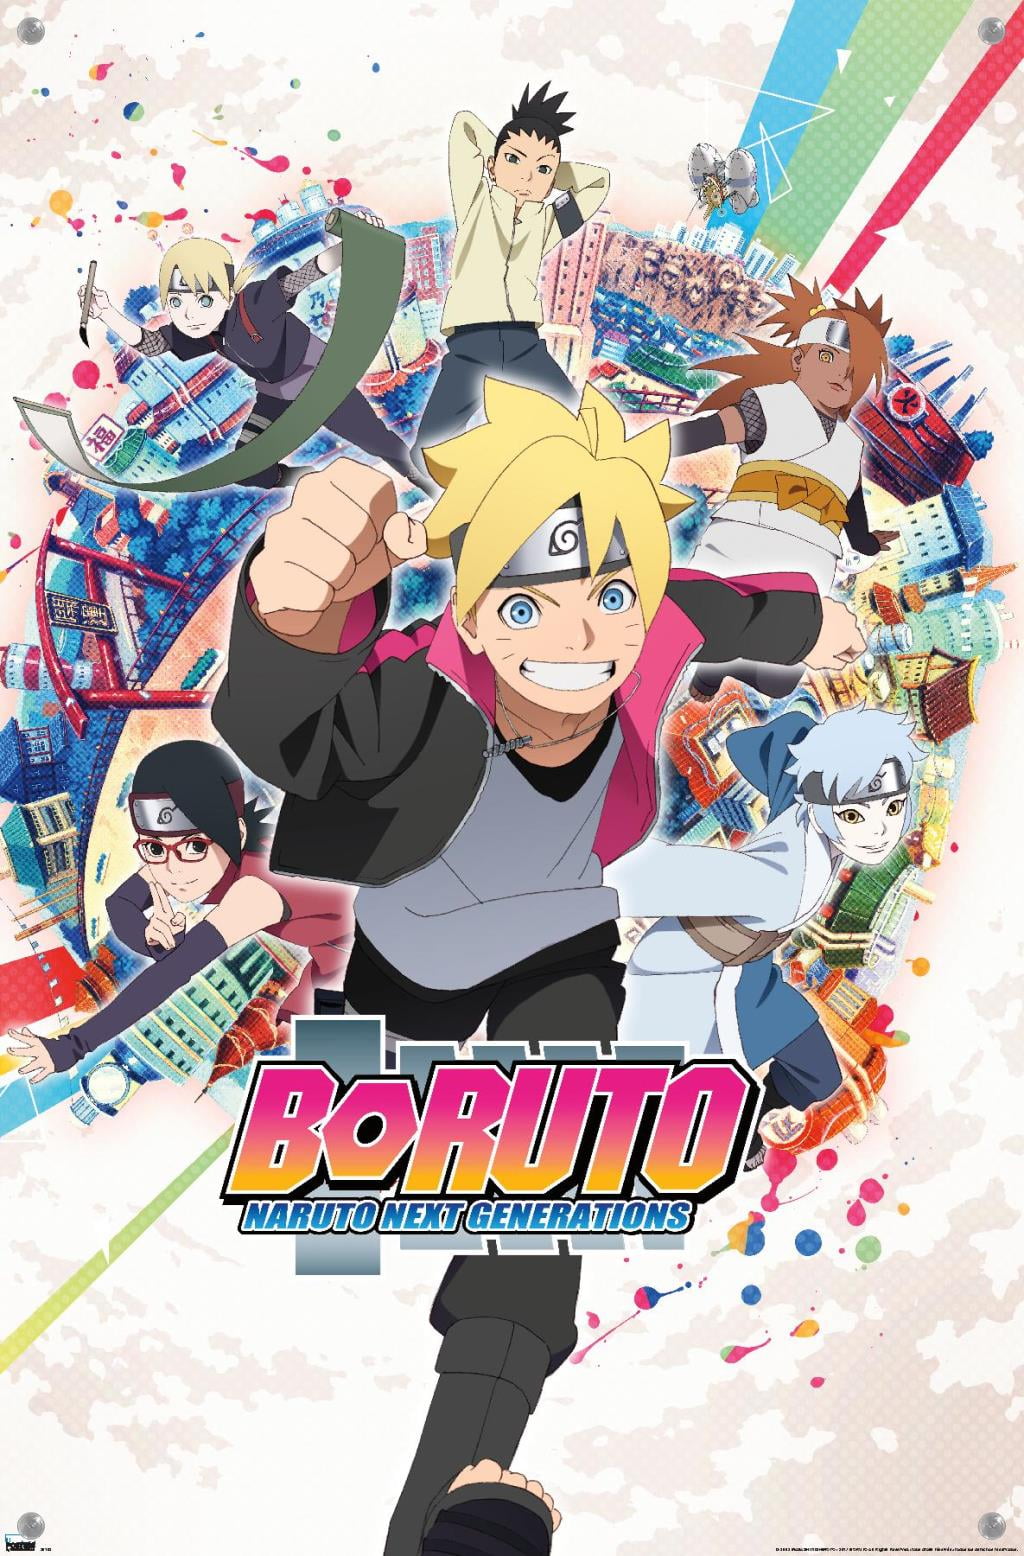 Boruto: Naruto Next Generations - Group Wall Poster, 22.375 x 34